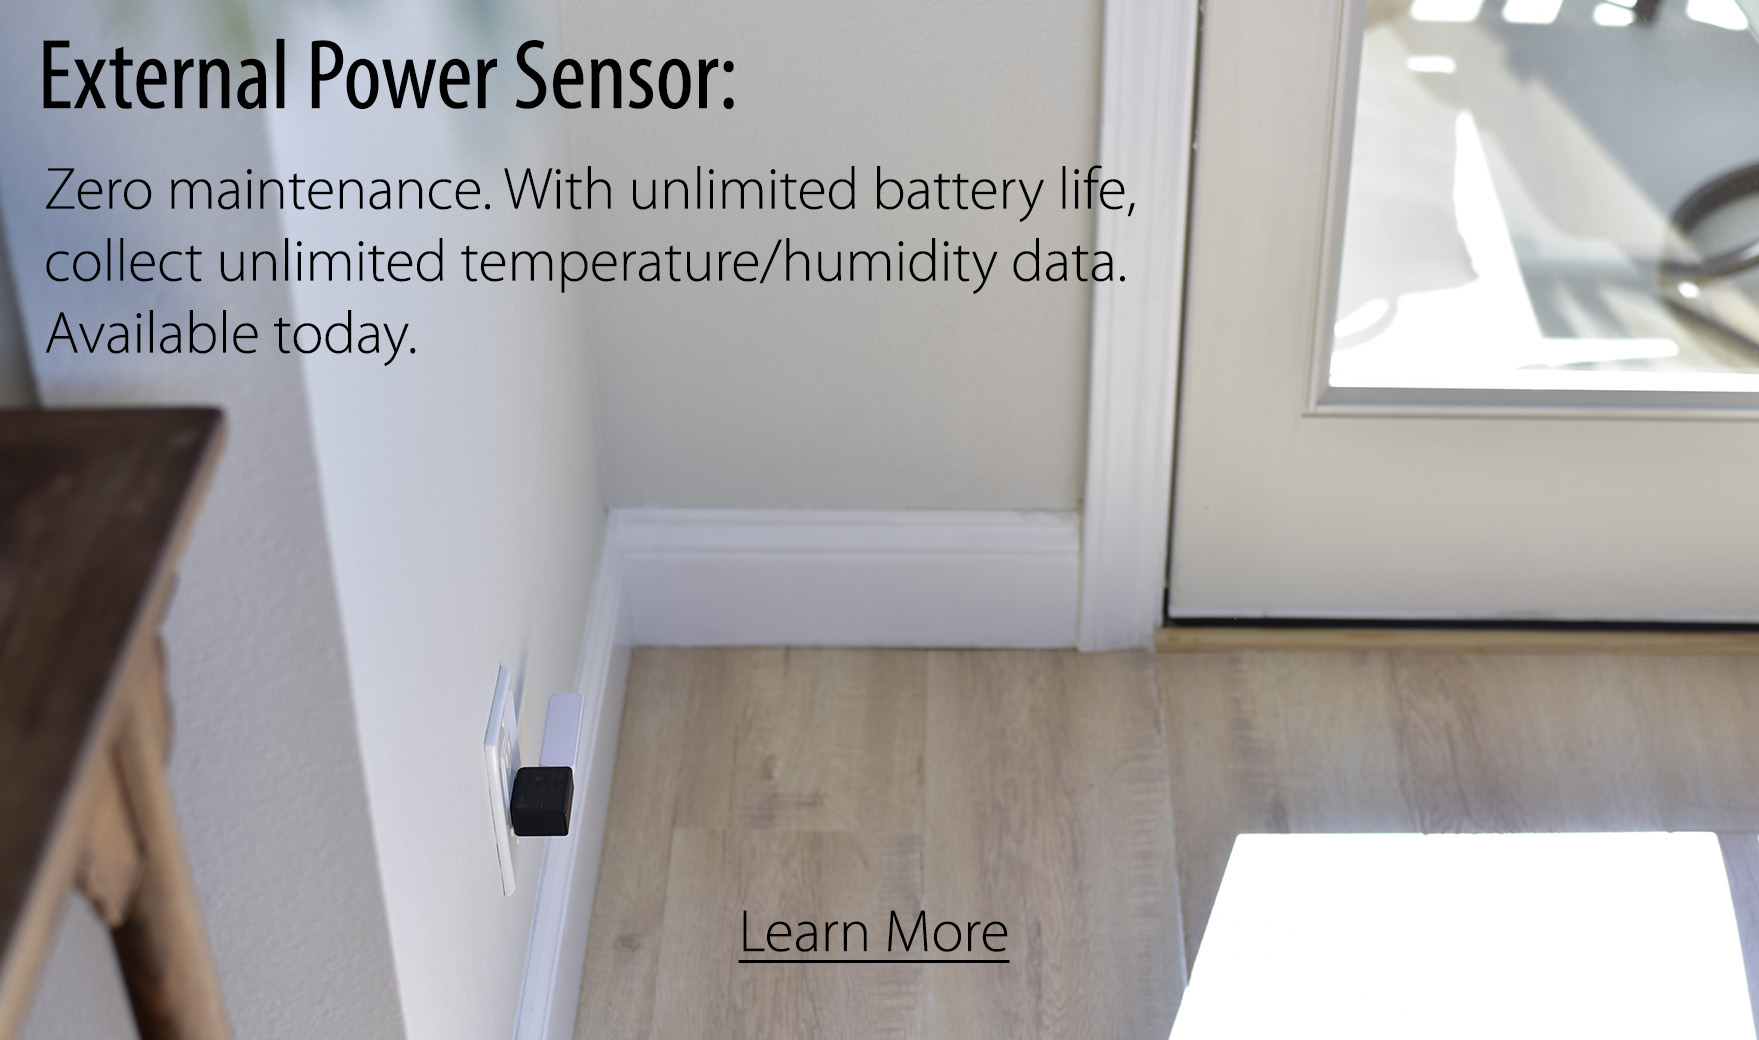 External Power Sensor: Zero maintenance. unlimited battery life, unlimited temperature/humidity data.